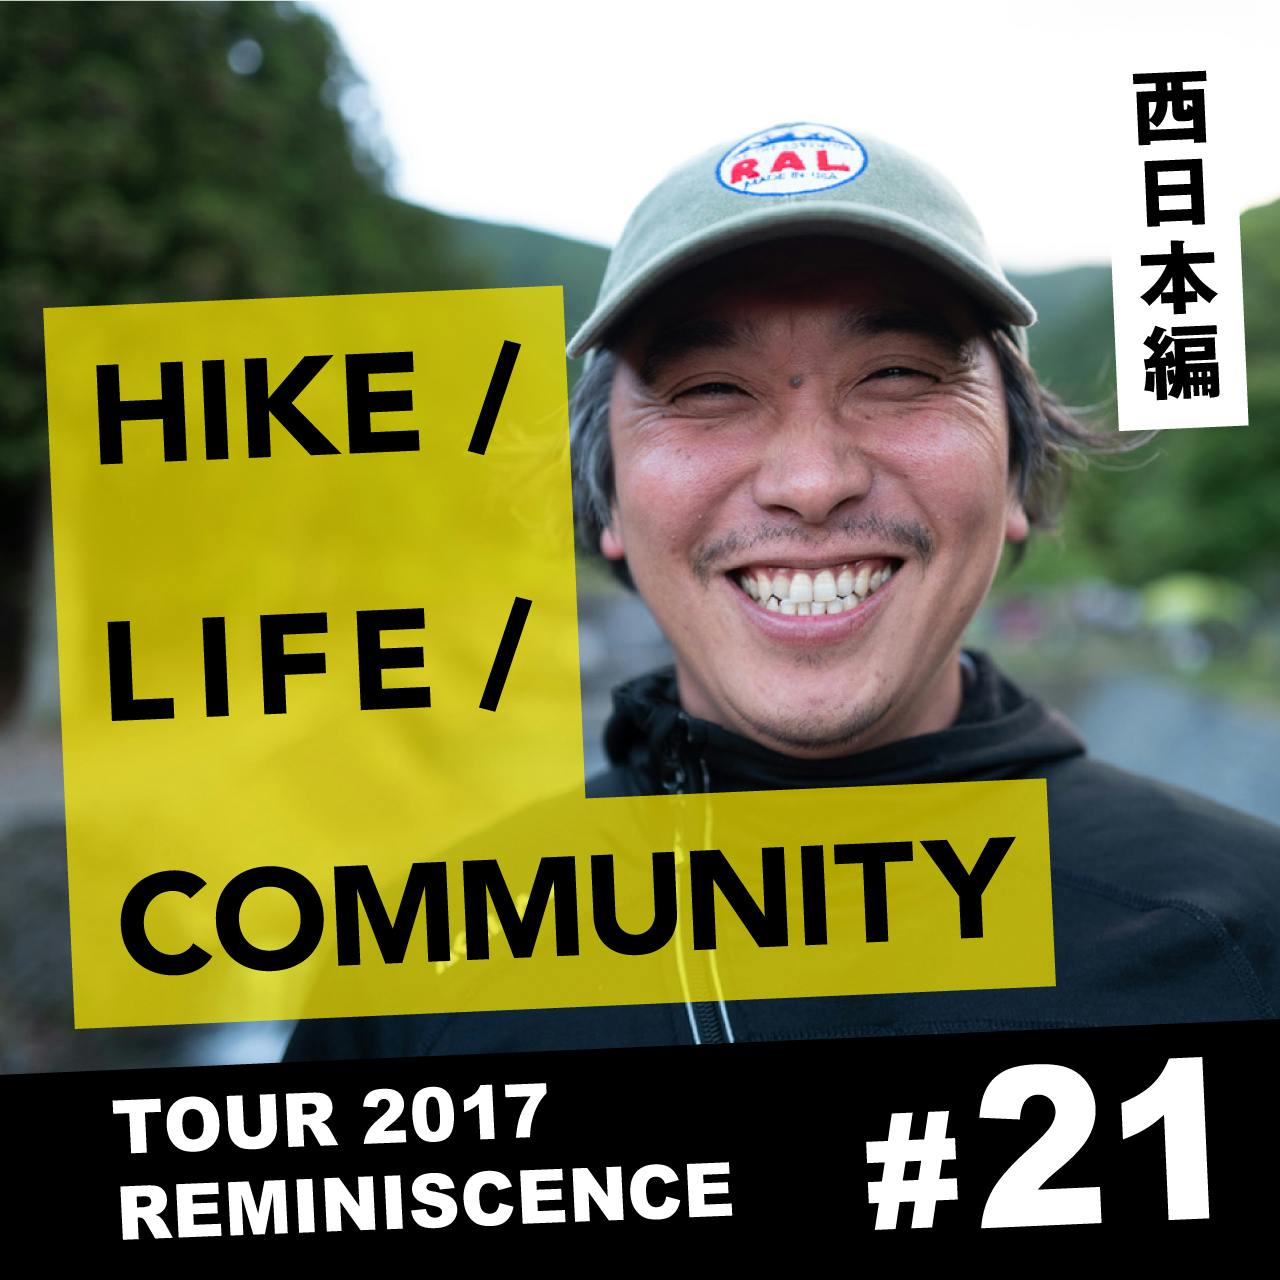 HIKE / LIFE / COMMUNITY TOUR 2017 REMINISCENCE #21 田中慎也（サークルズ代表）